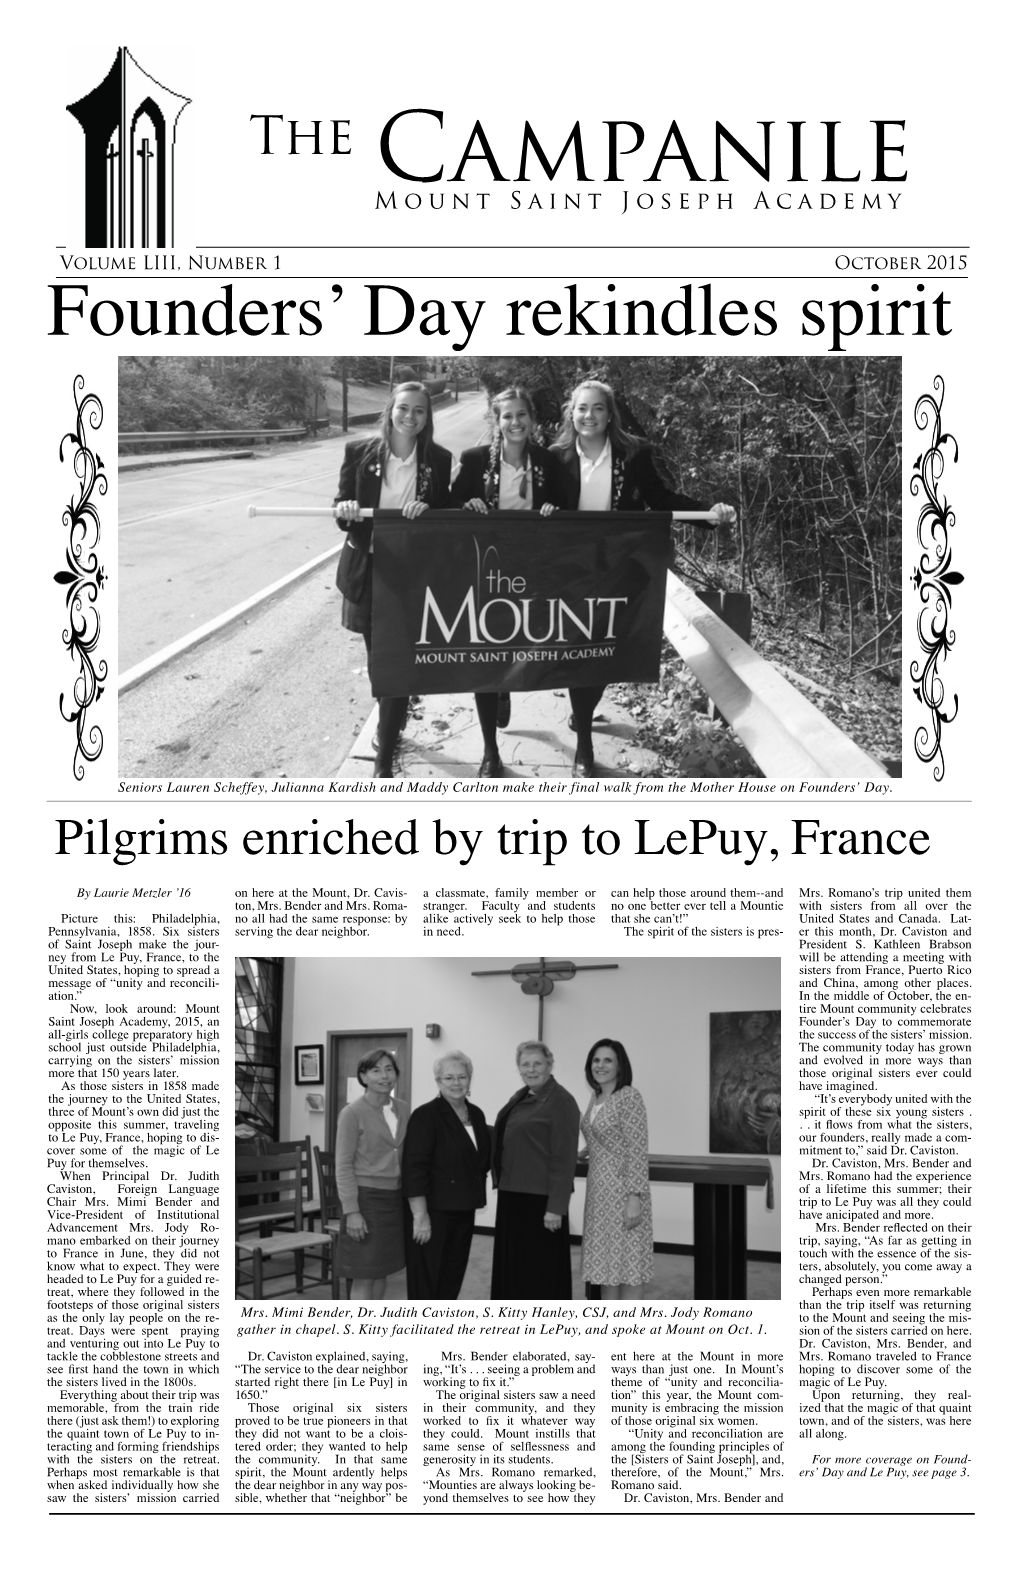 Founders' Day Rekindles Spirit